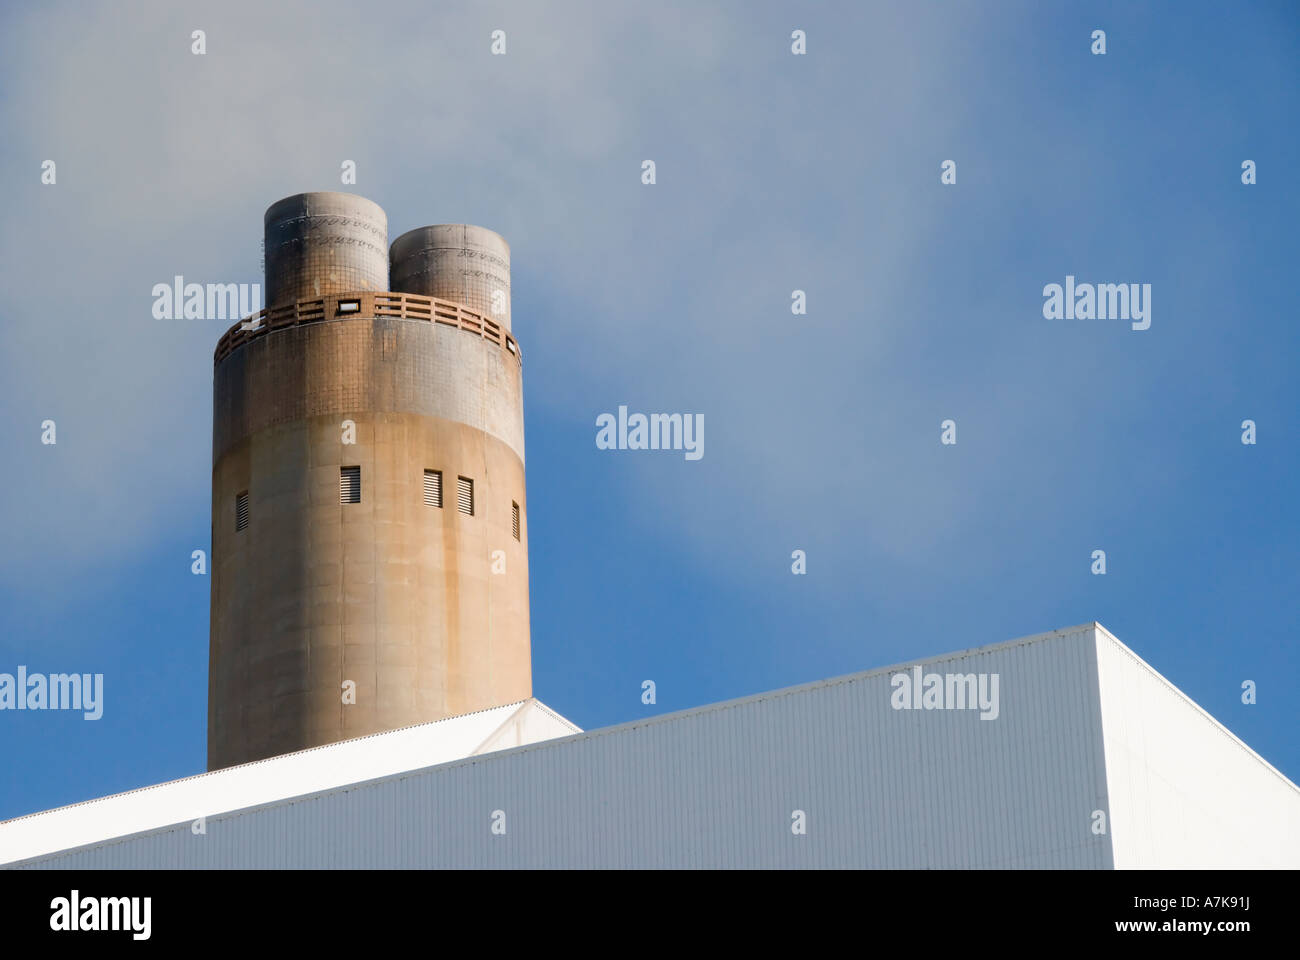 A smoking  power  station chimney stack  on a plain blue sky Stock Photo